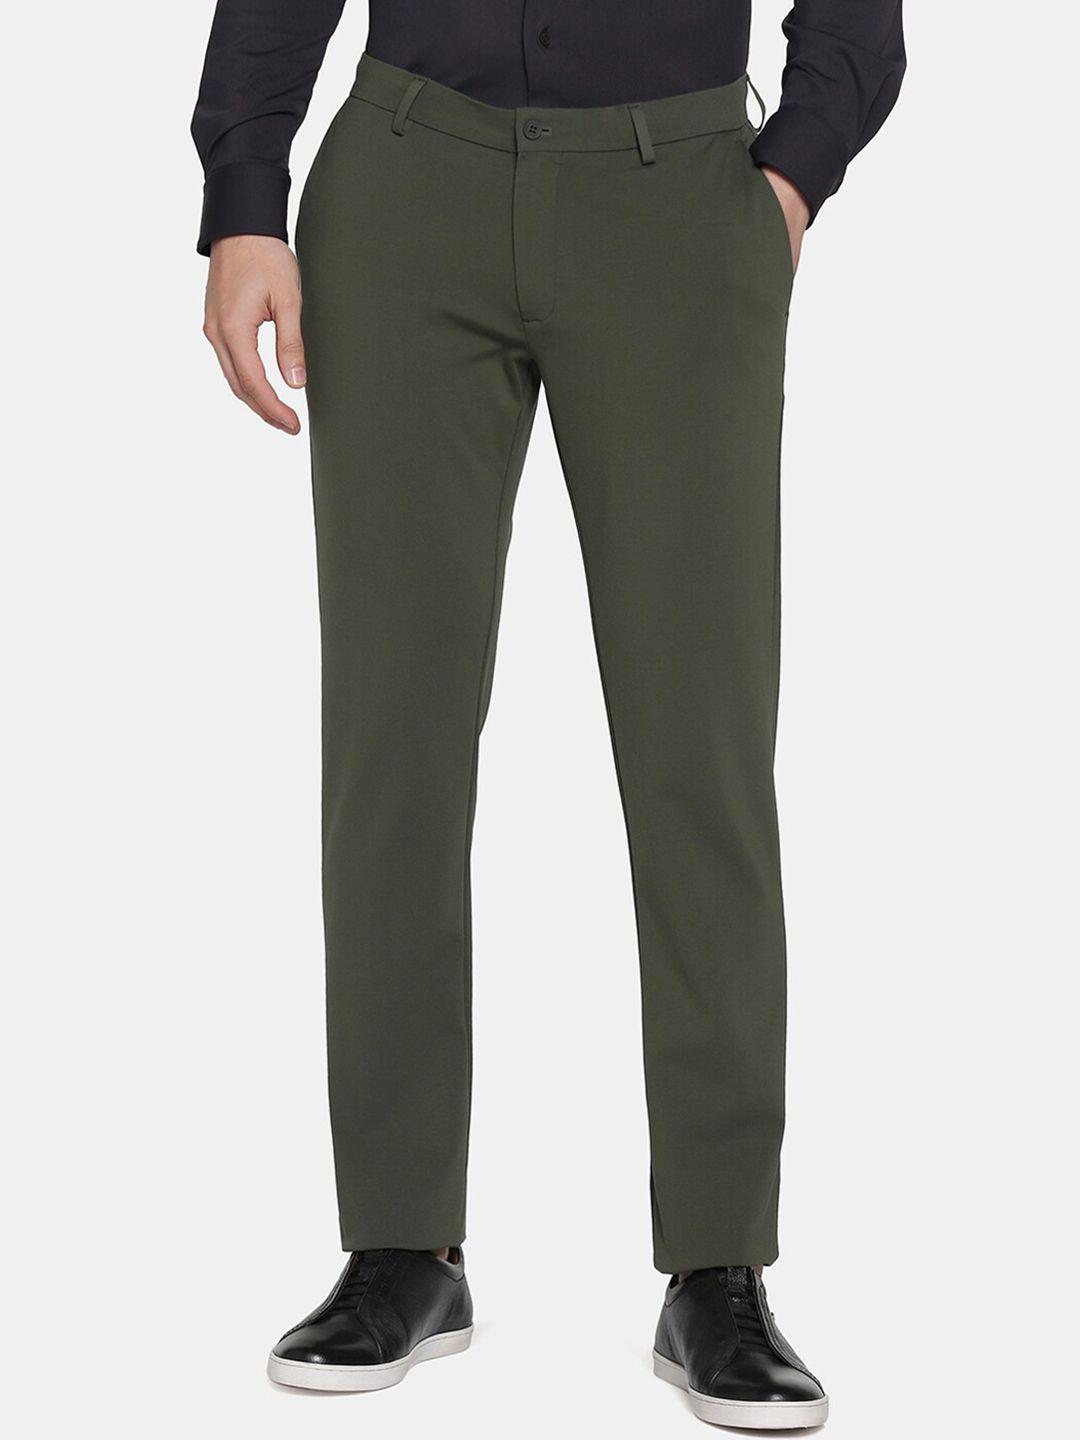 blackberrys-men-slim-fit-low-rise-chinos-cotton-trousers